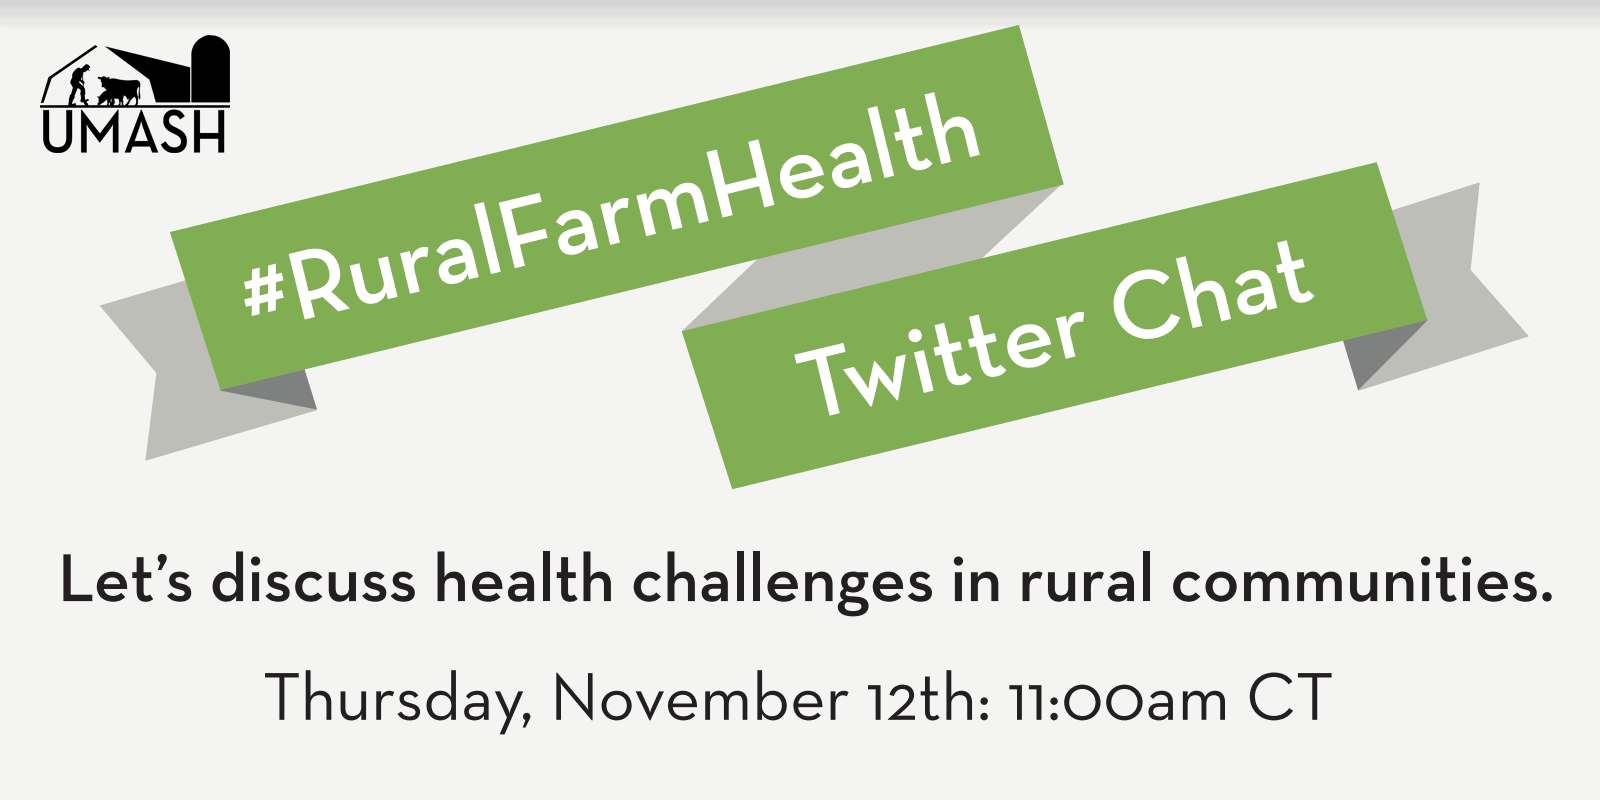 Rural Farm Health Promotional Card